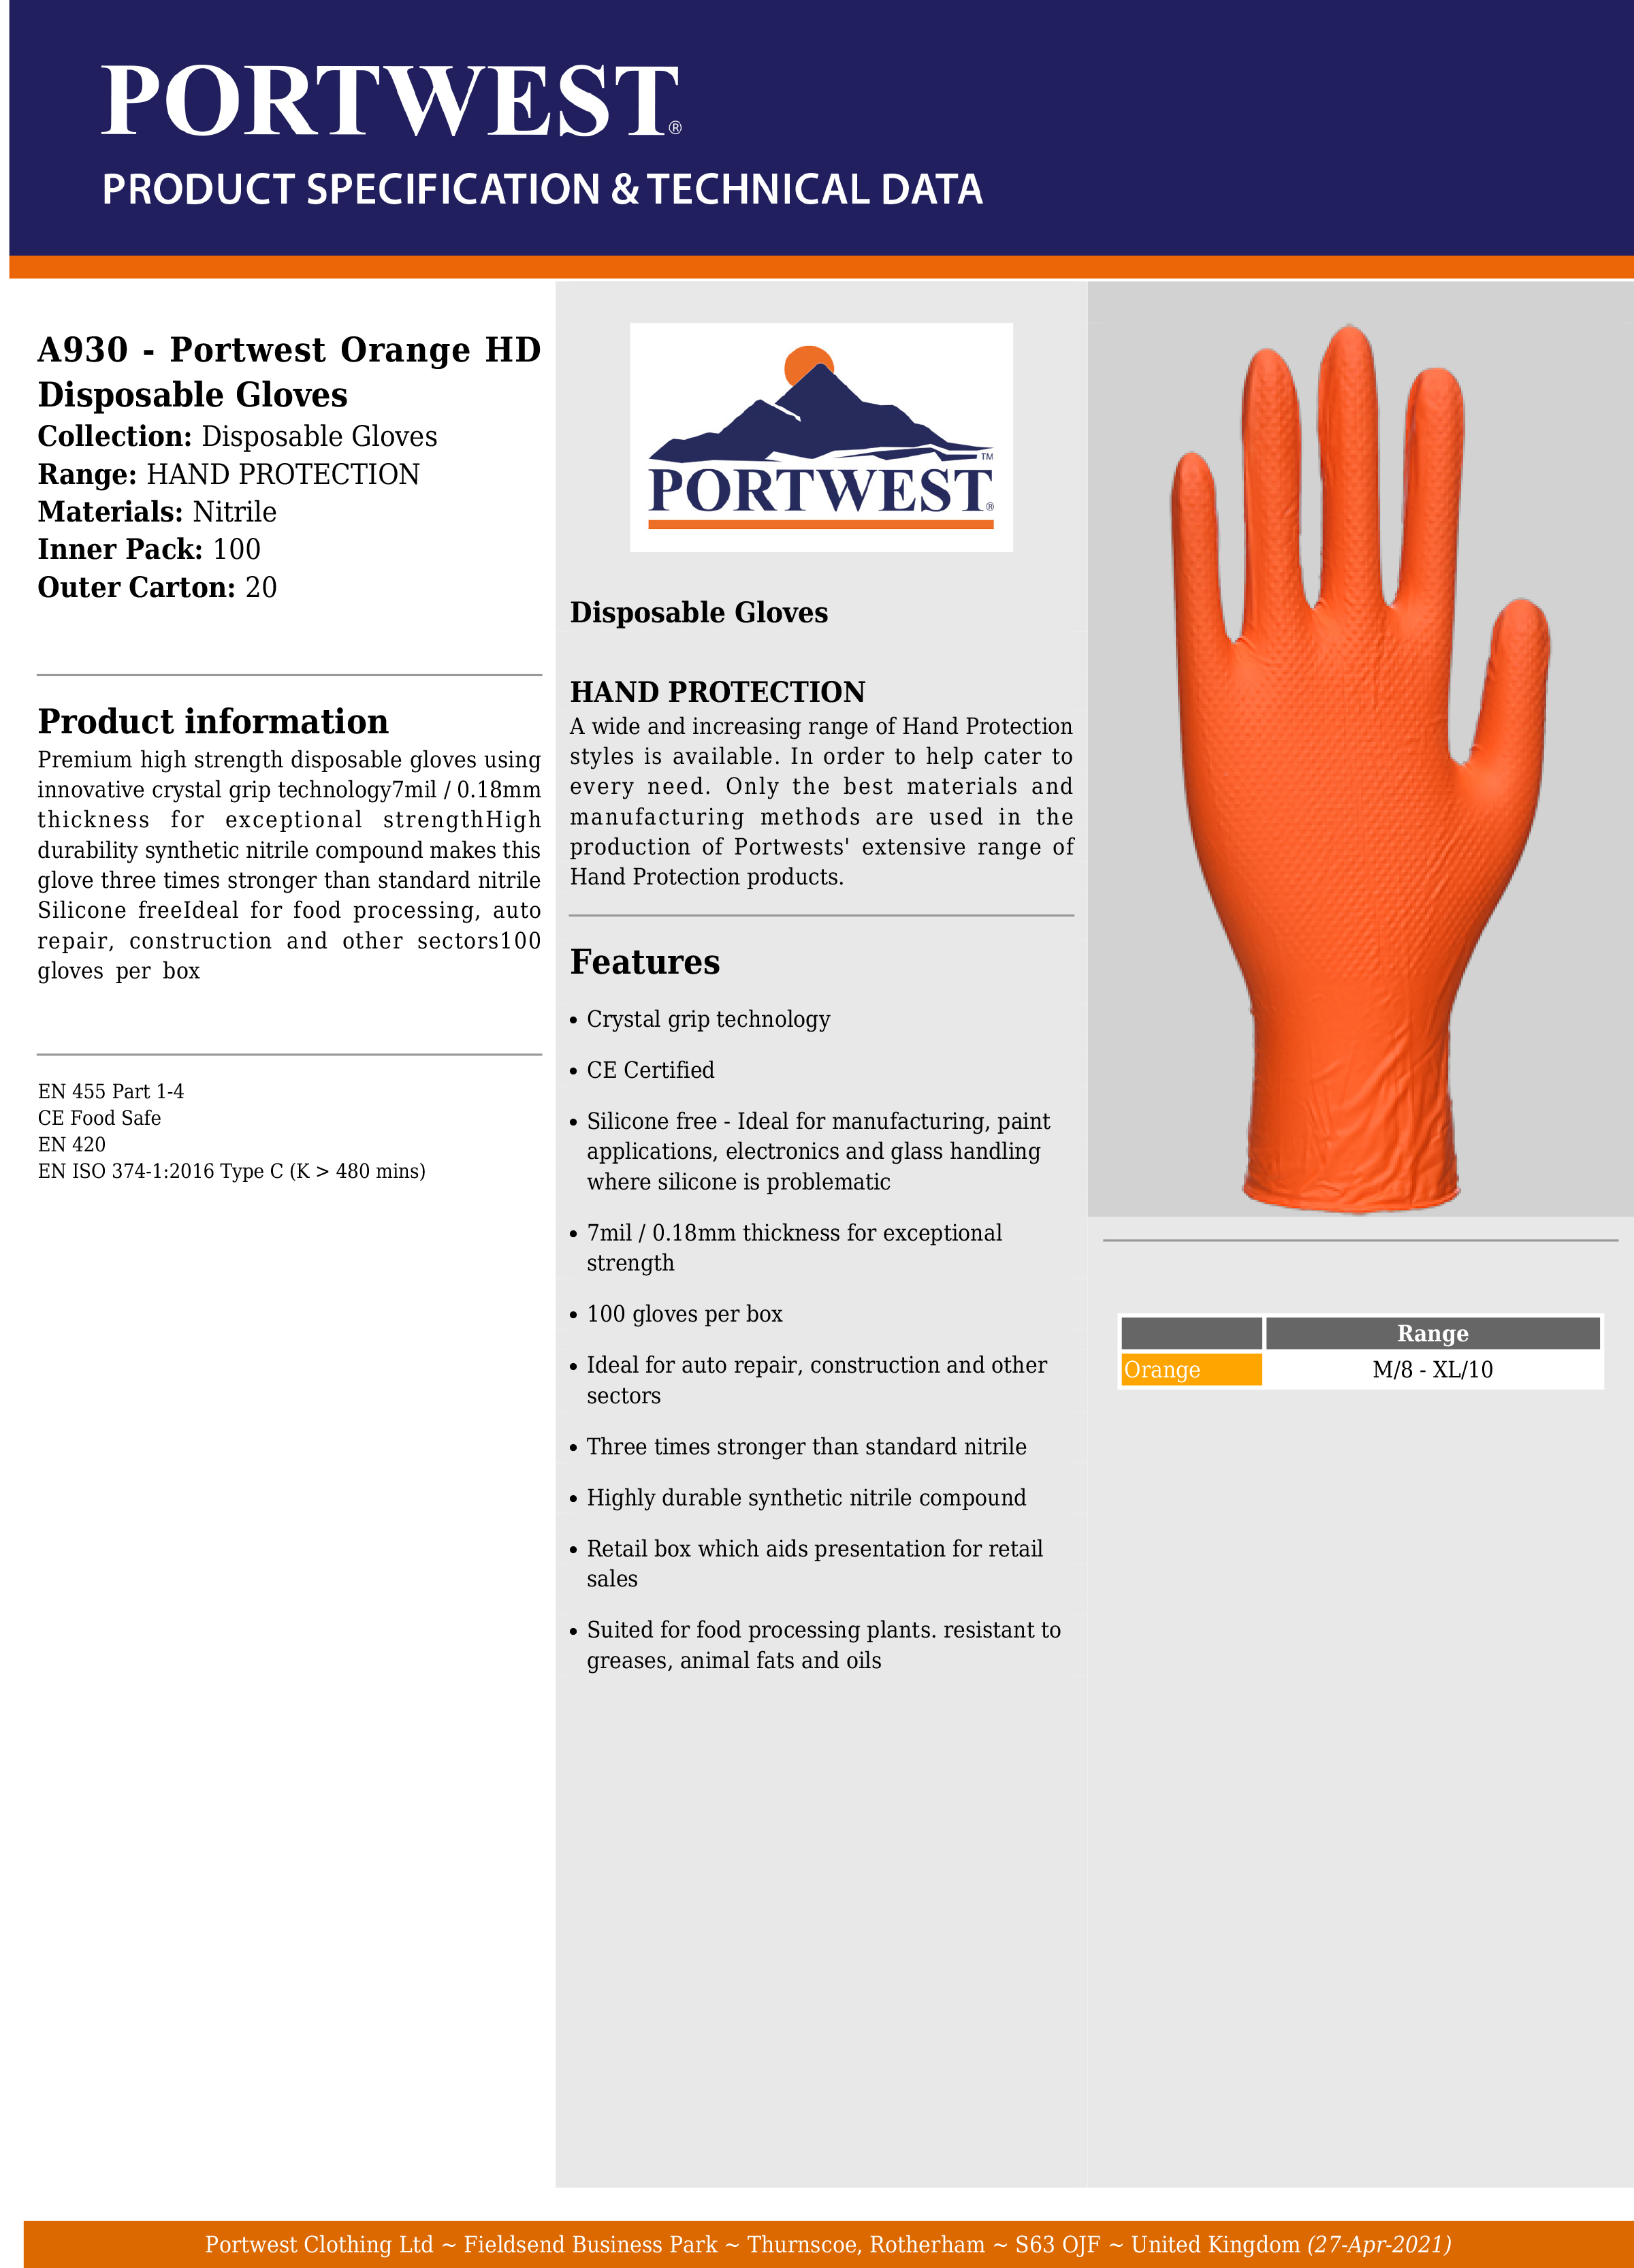 https://www.cabletiesandmore.com/uploads/A930-Portwest-Orange-HD-Disposable-Gloves-Specification-Sheet-Thumbnail.jpg